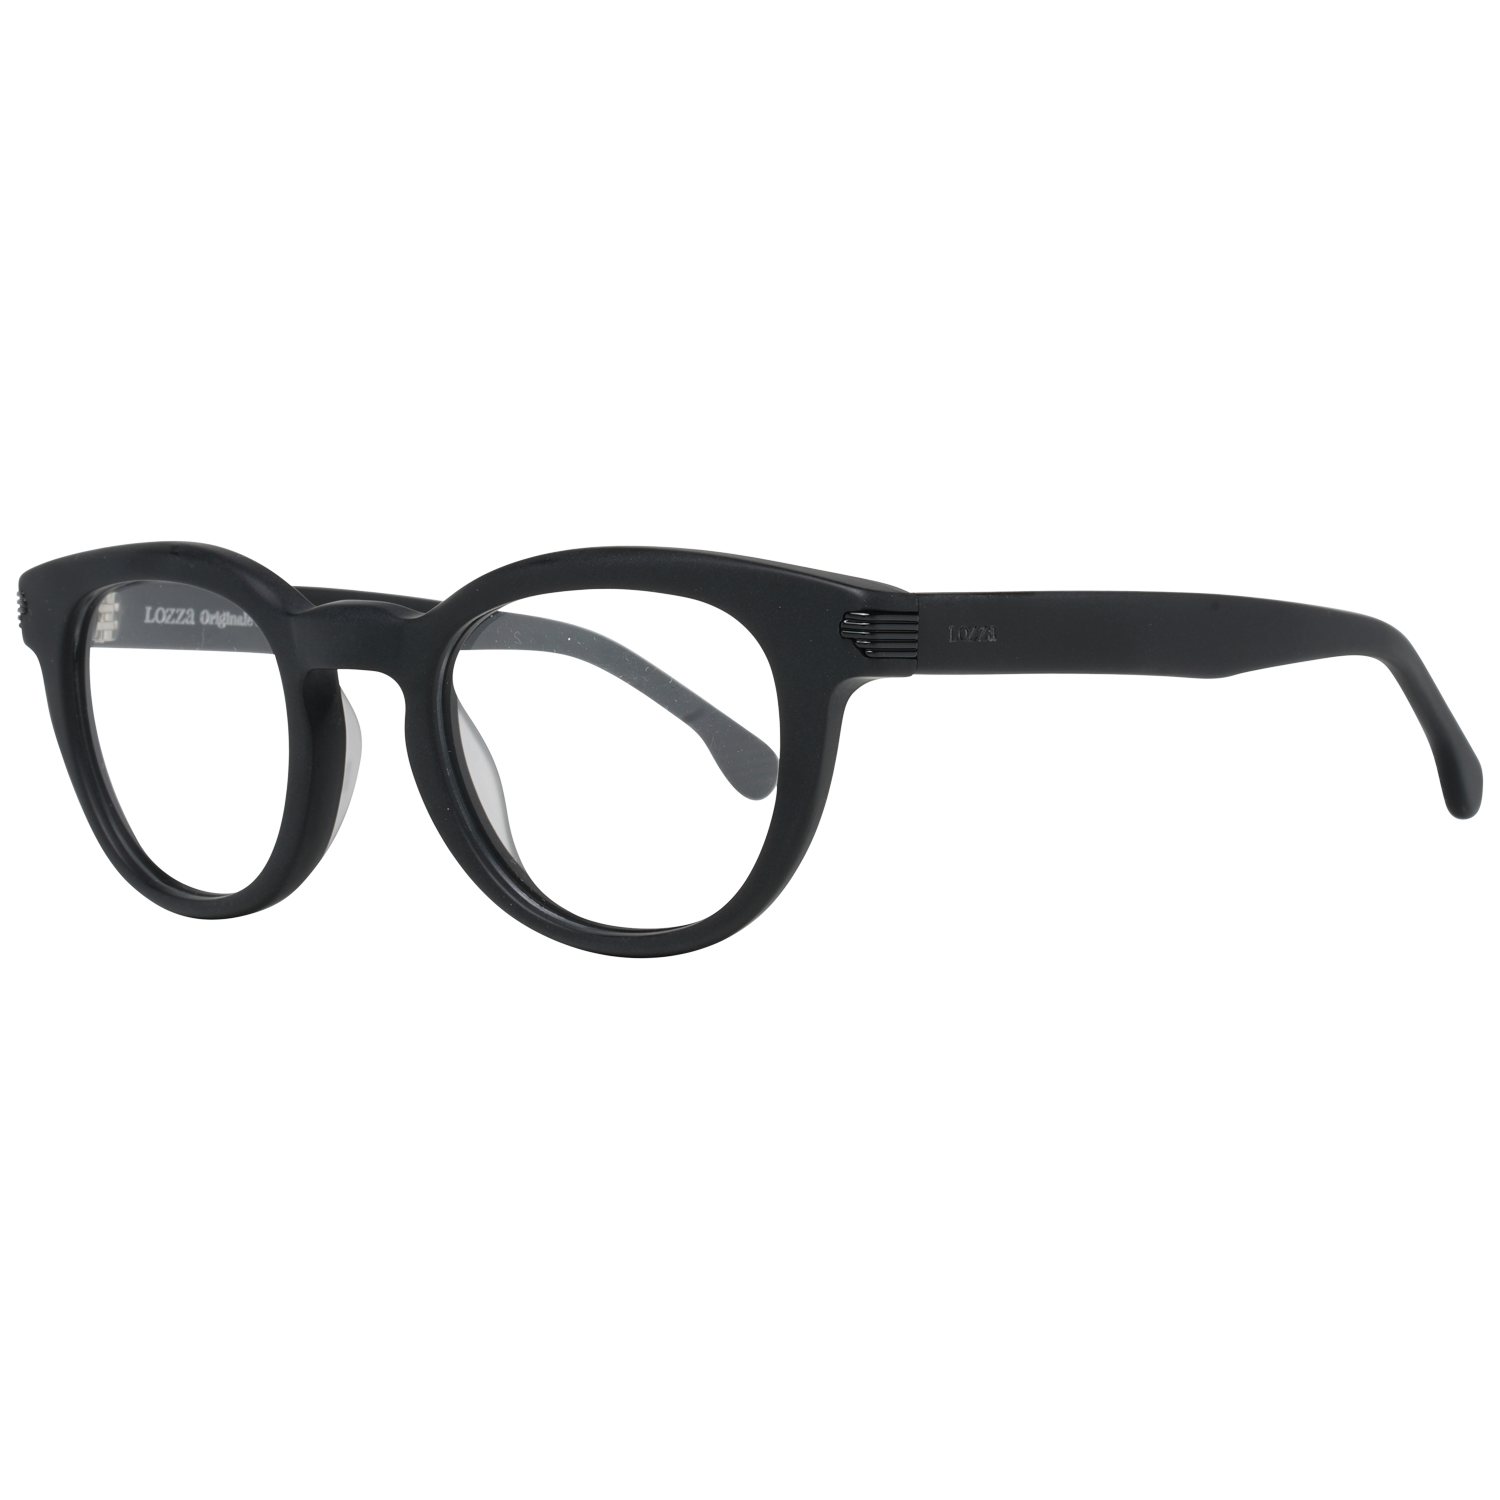 Lozza Frames Lozza Optical Frame VL4123 BLKM 45 Eyeglasses Eyewear UK USA Australia 